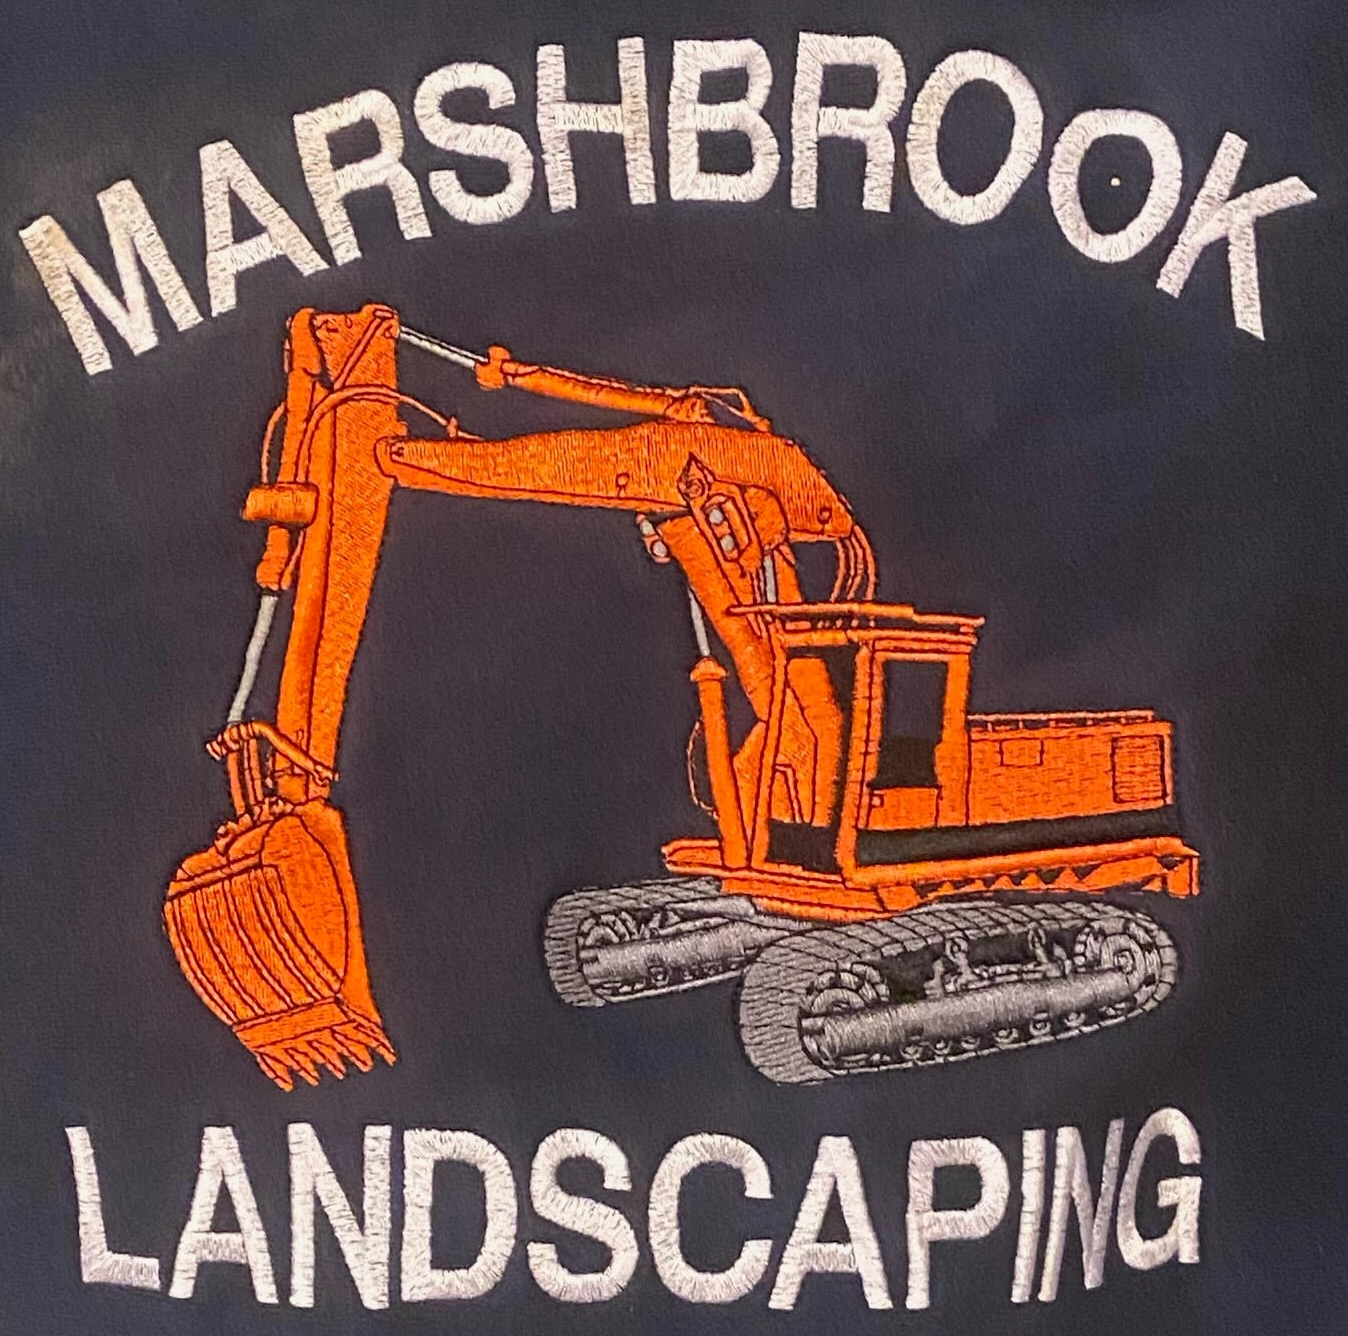 Marsh Brook Landscaping Logo